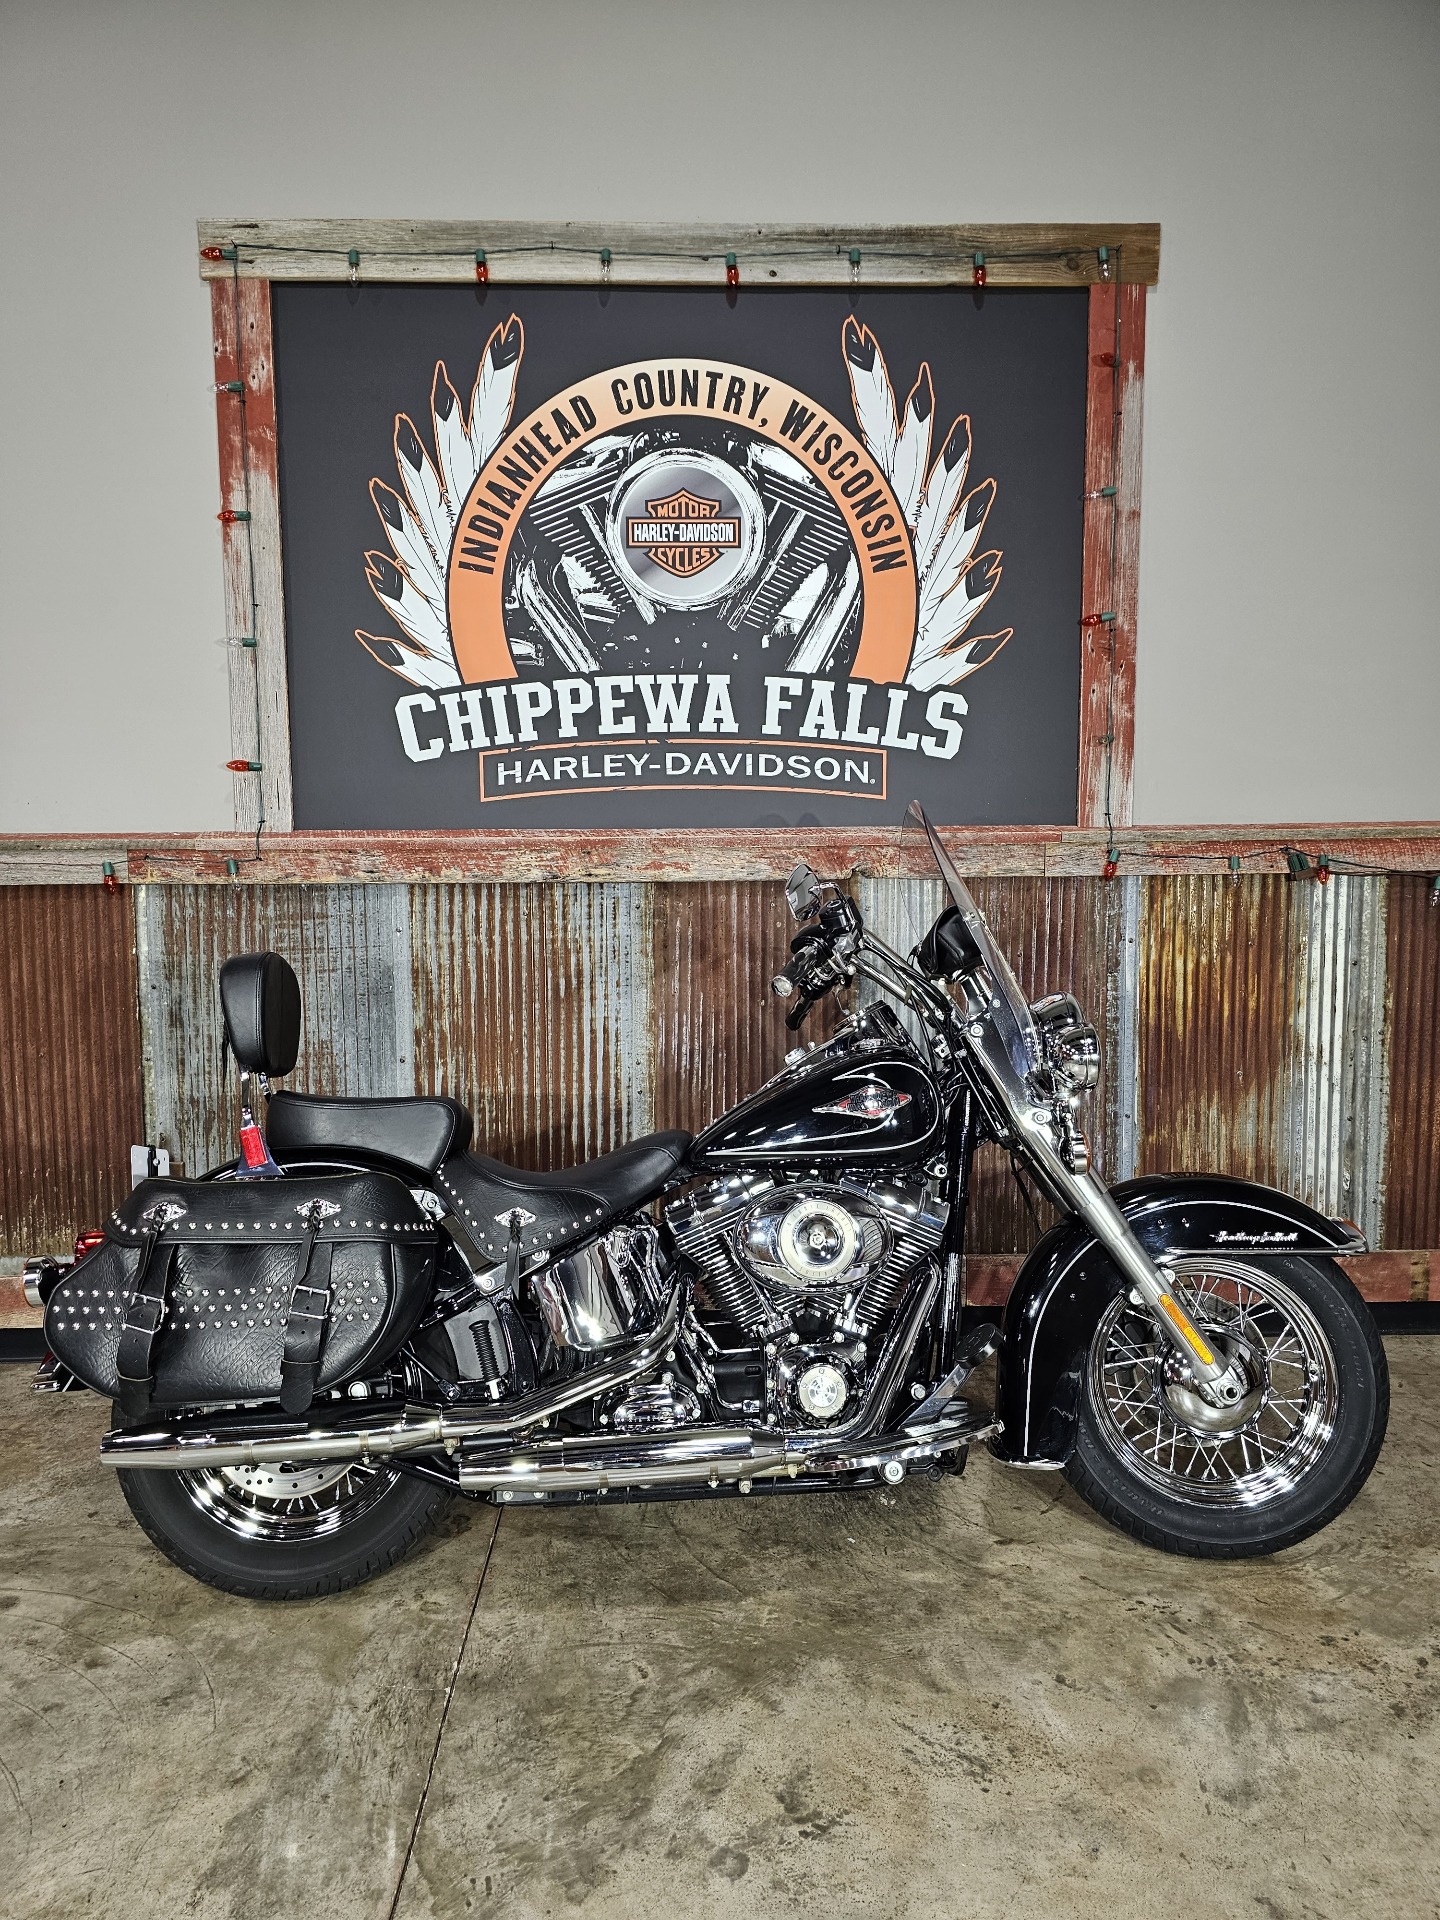 2011 Harley-Davidson Heritage Softail® Classic in Chippewa Falls, Wisconsin - Photo 2